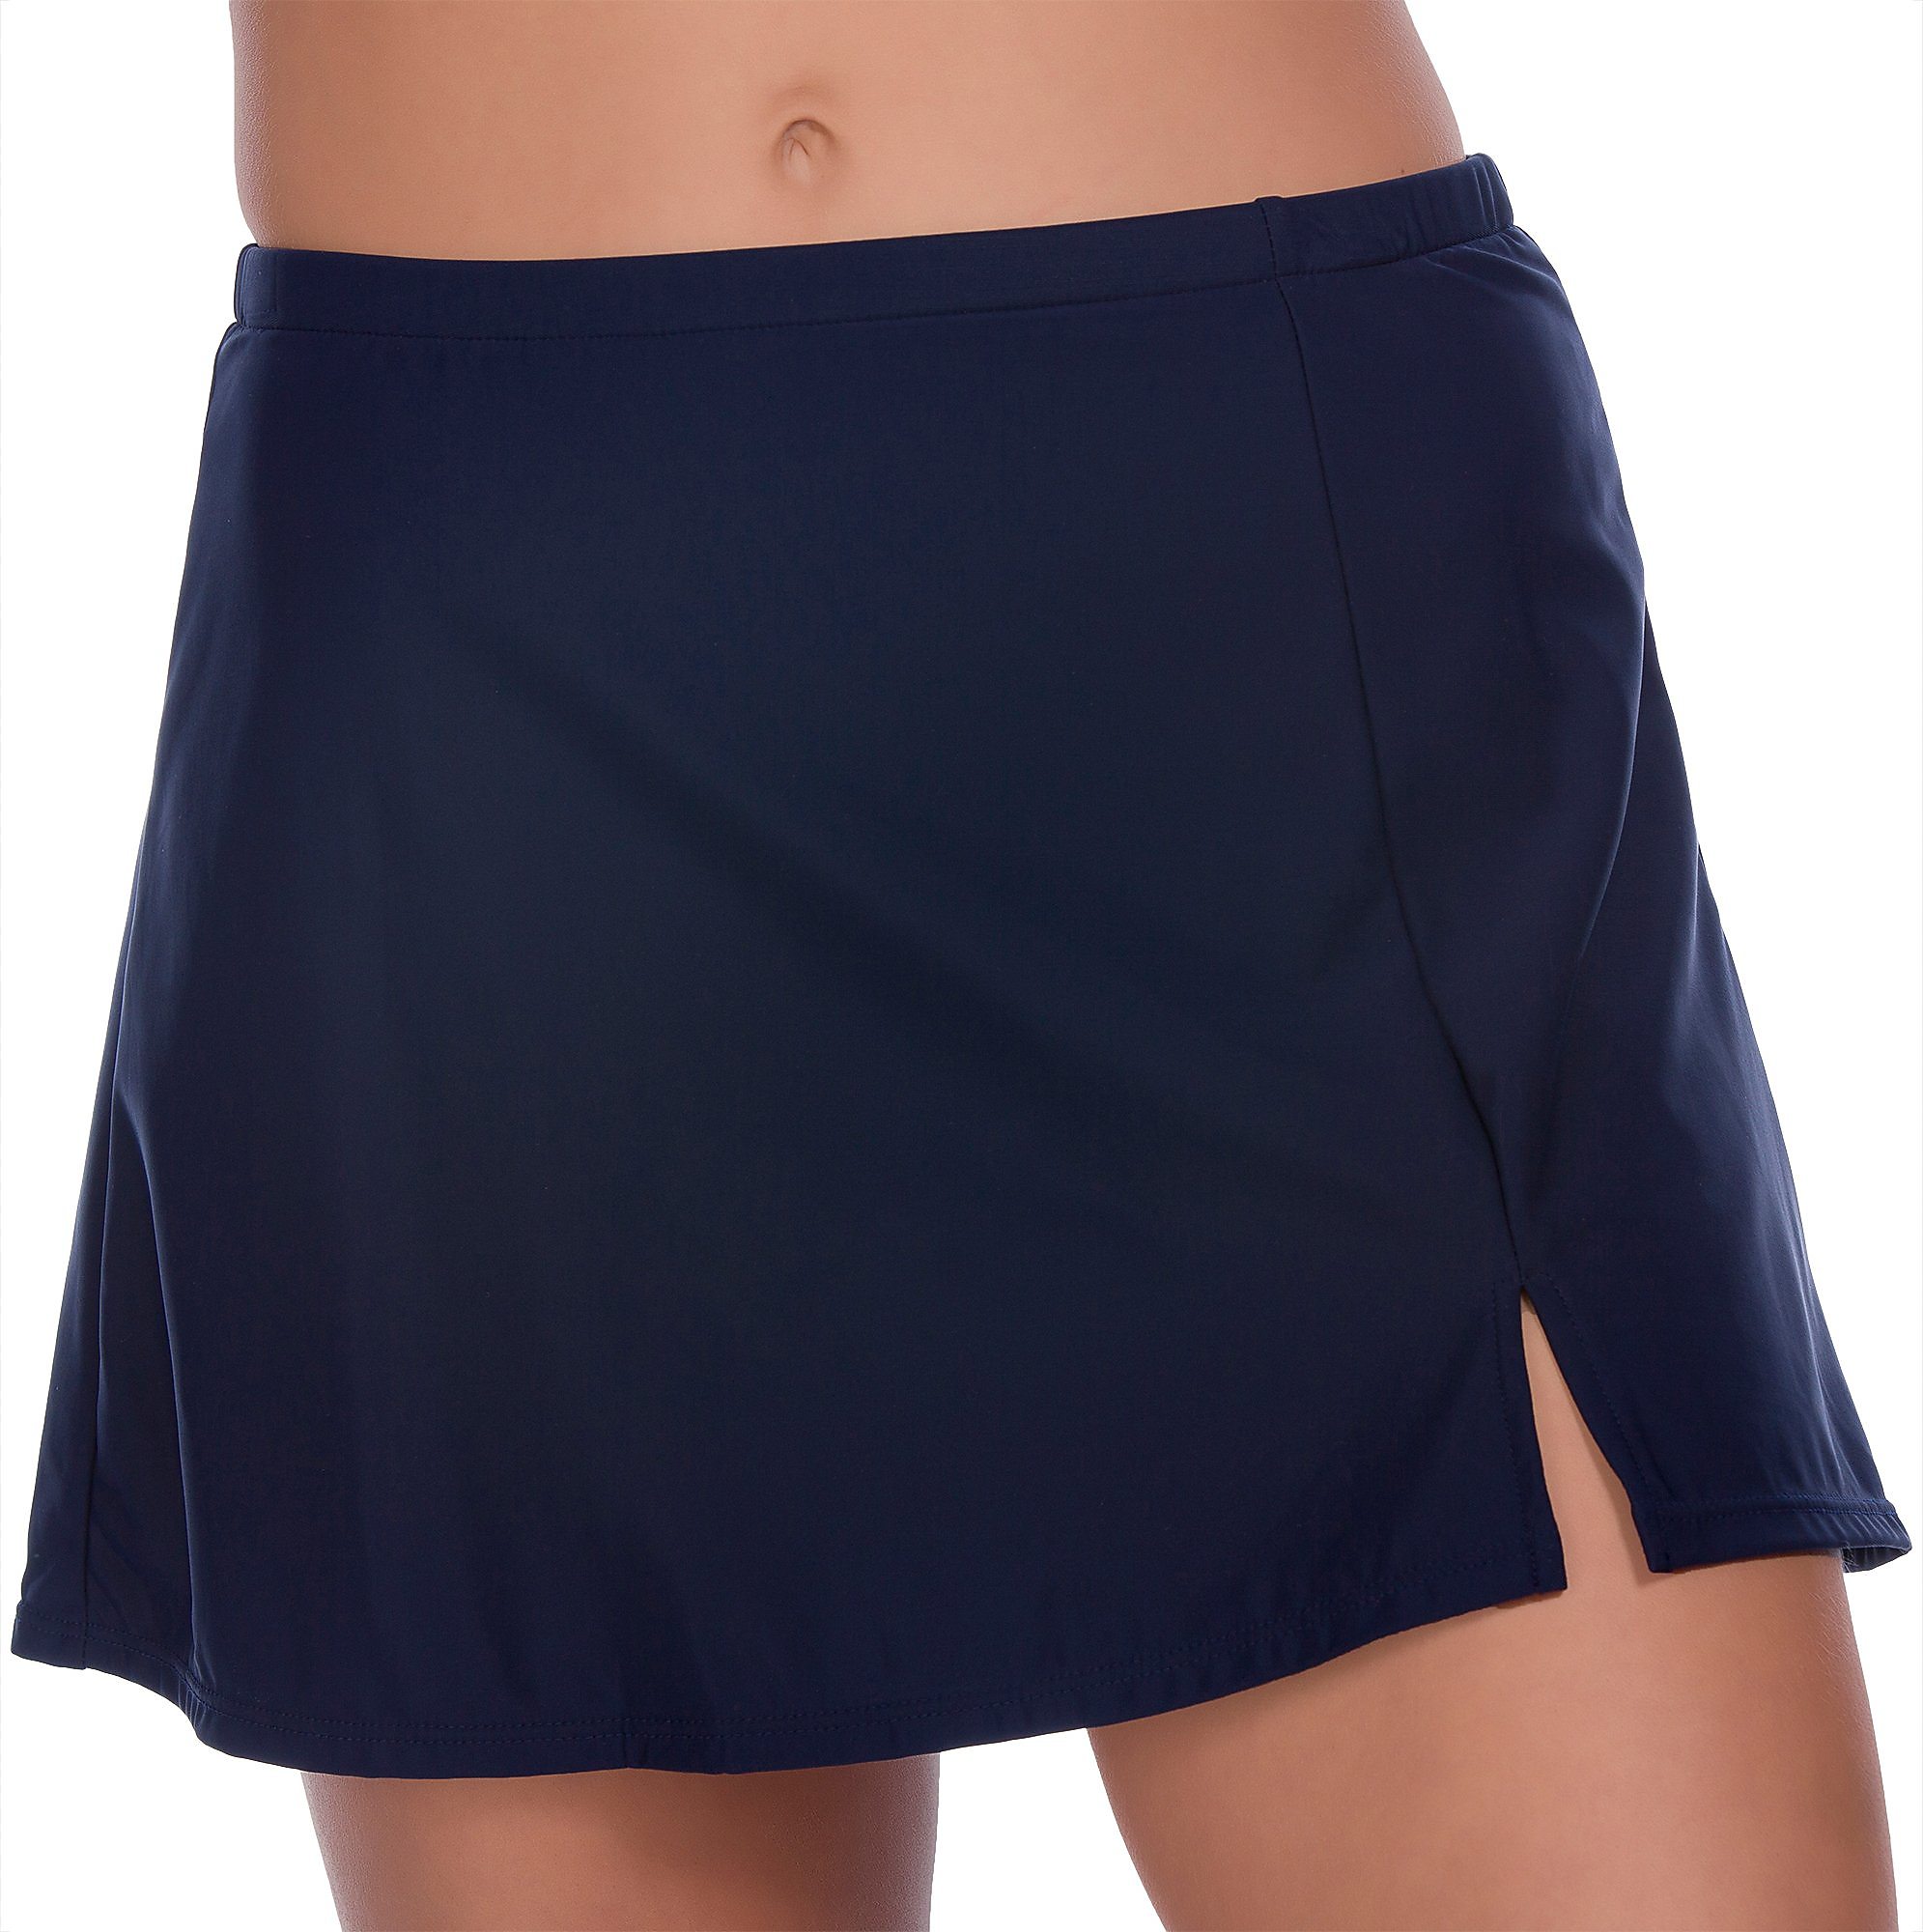 Paradise Bay Womens Solid Side Slit Swim Skirt 14 Navy blue | eBay